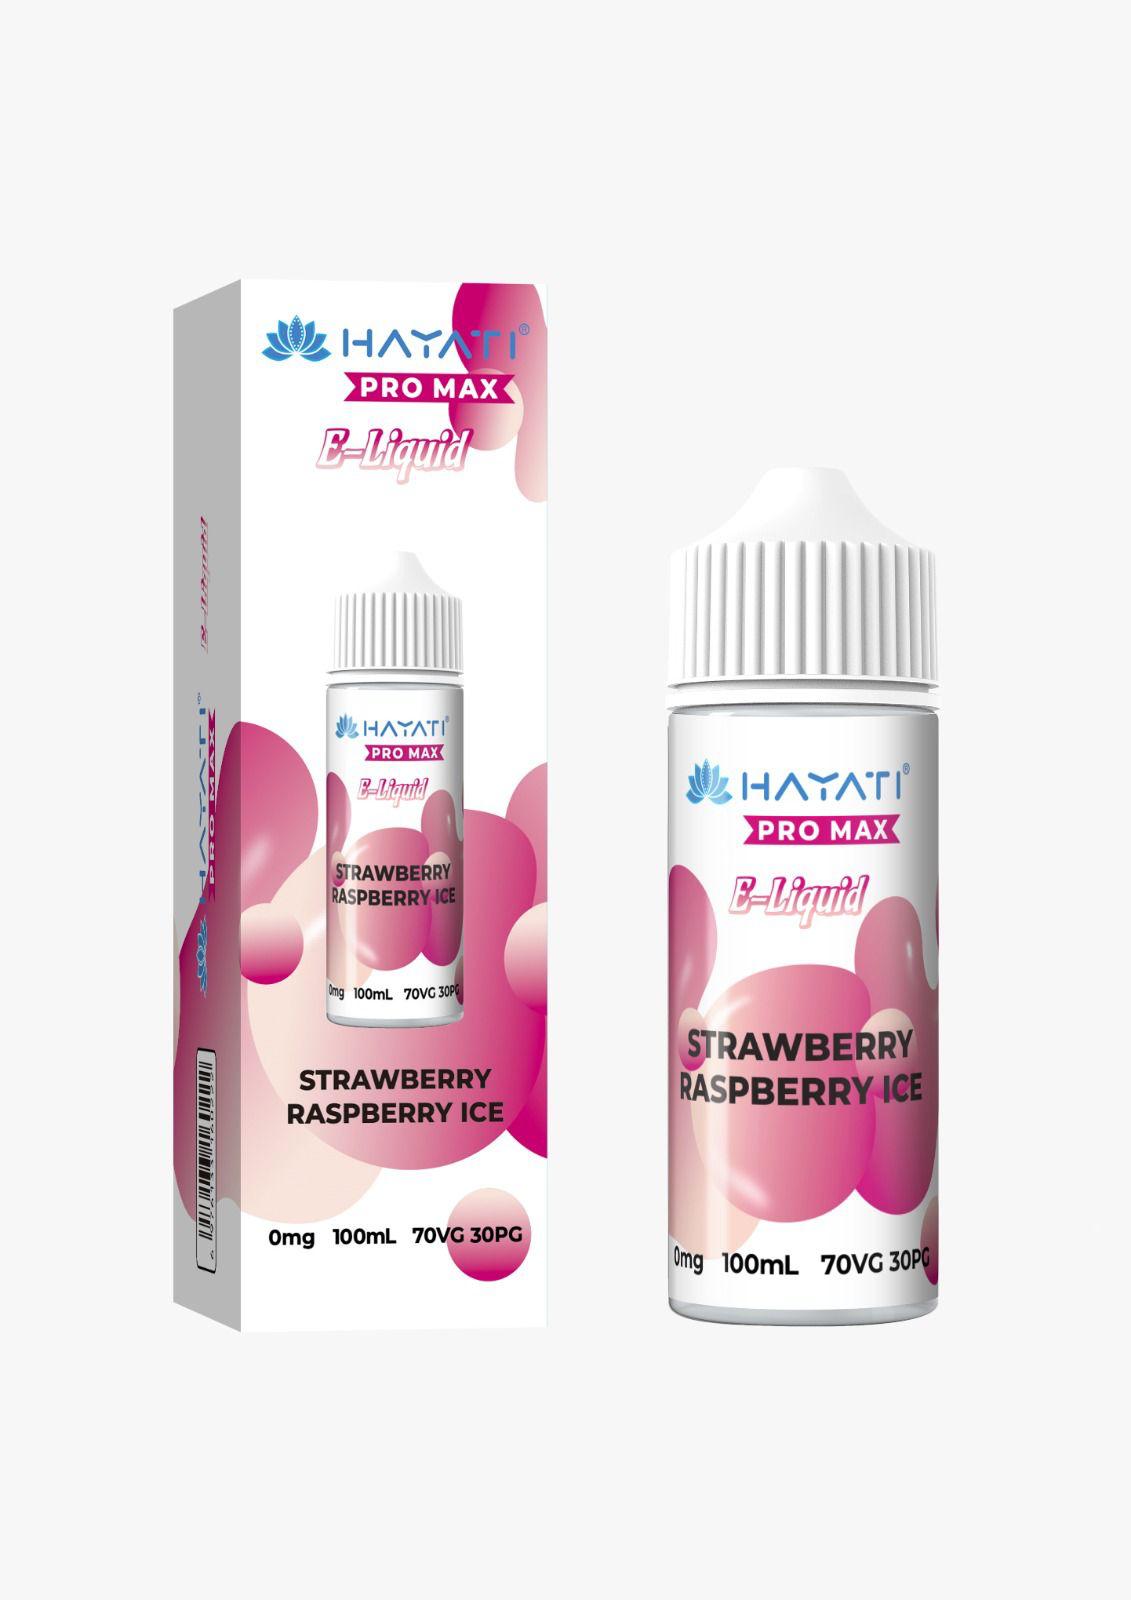 Hayati Pro Max E-Liquid 100ml 0mg Vape Juice